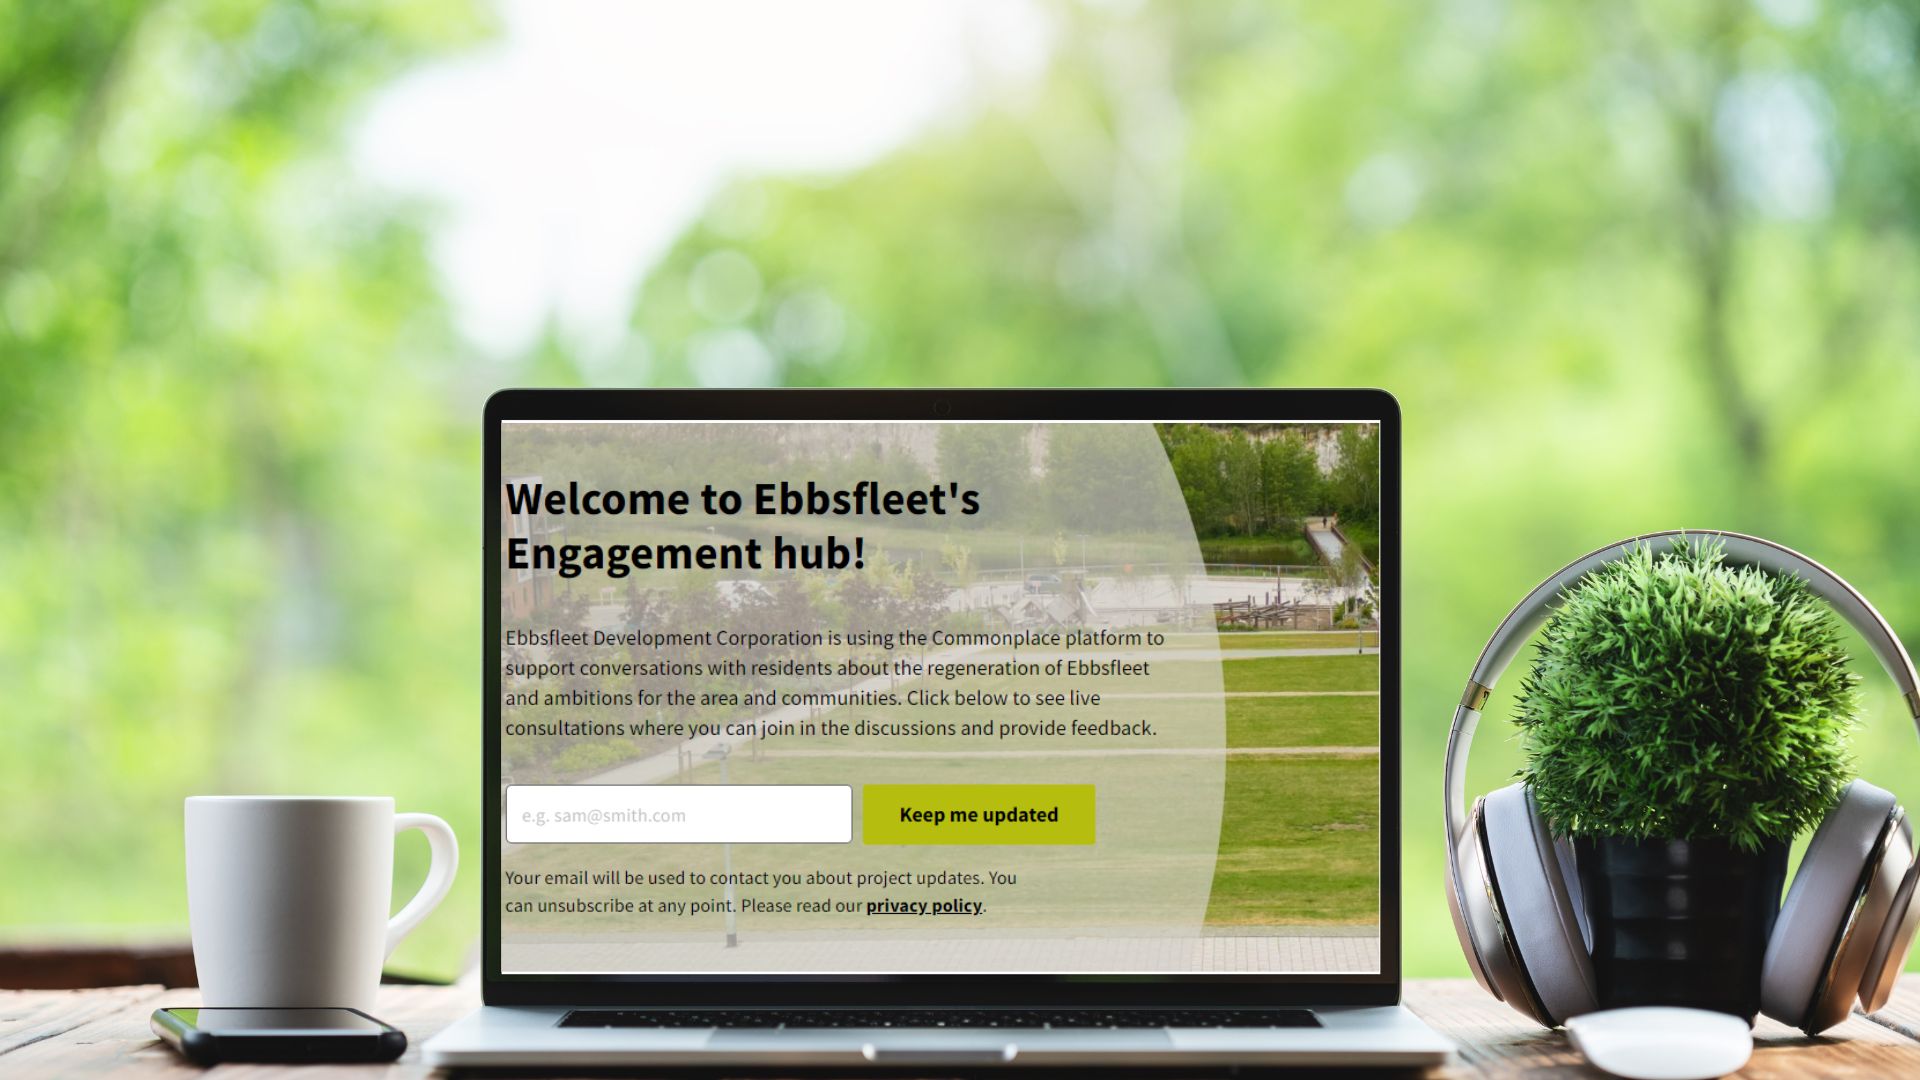 Stock image of Ebbsfleet engagement hub on laptop